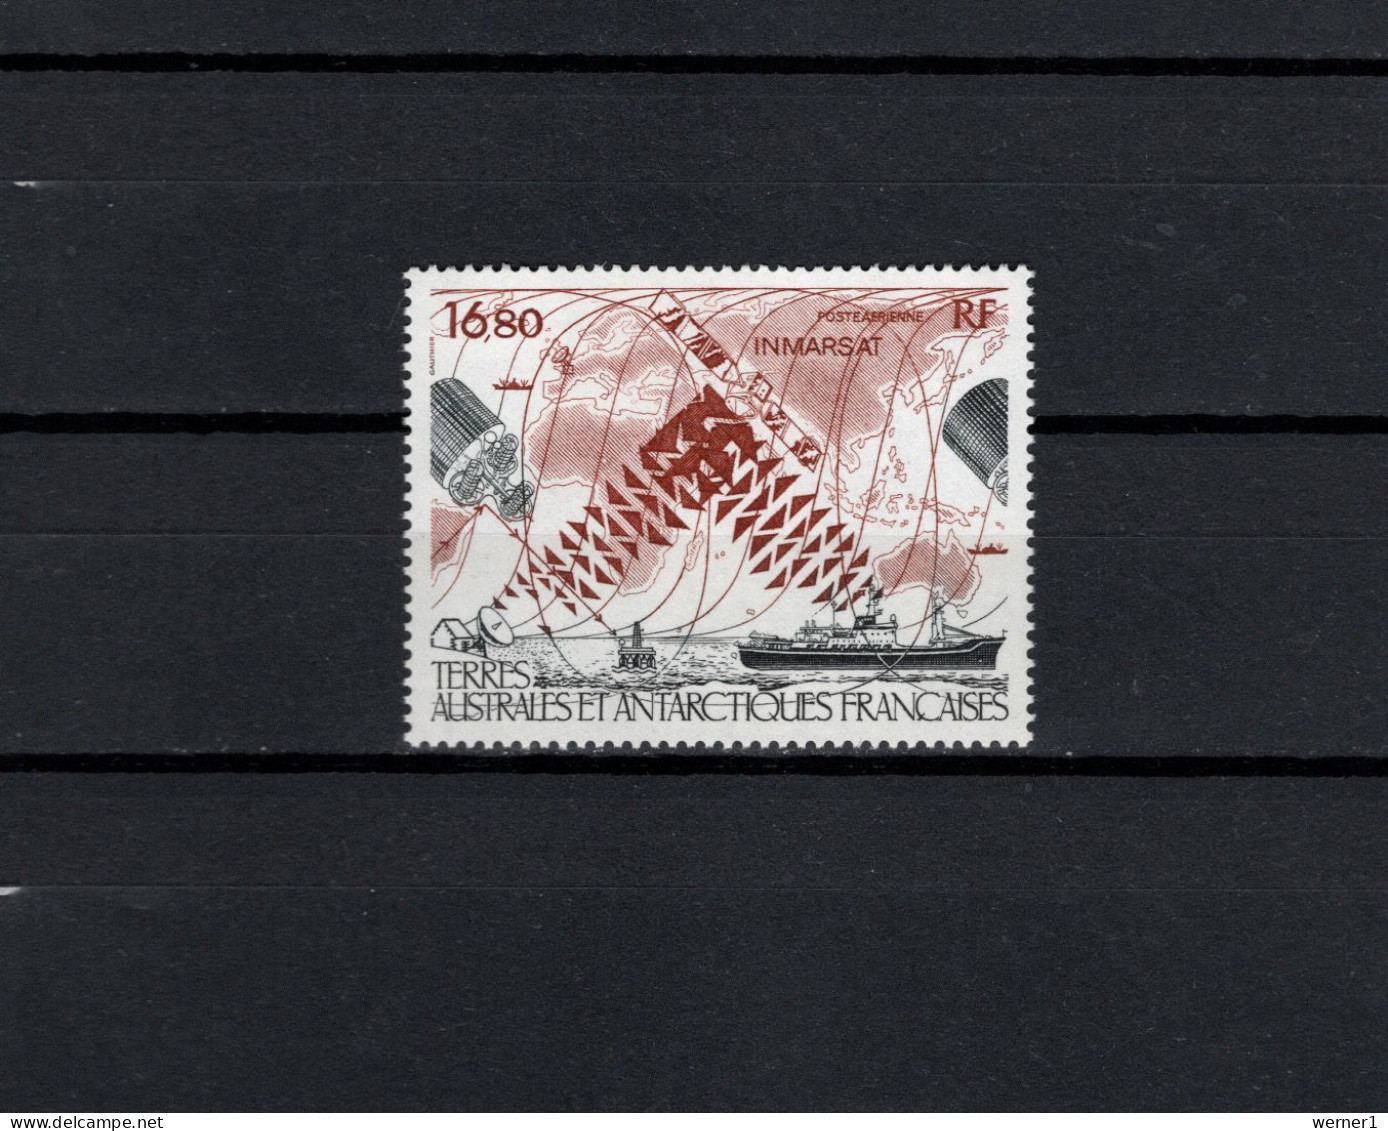 FSAT French Antarctic Territory 1987 Space, INMARSAT Stamp MNH - Oceanië